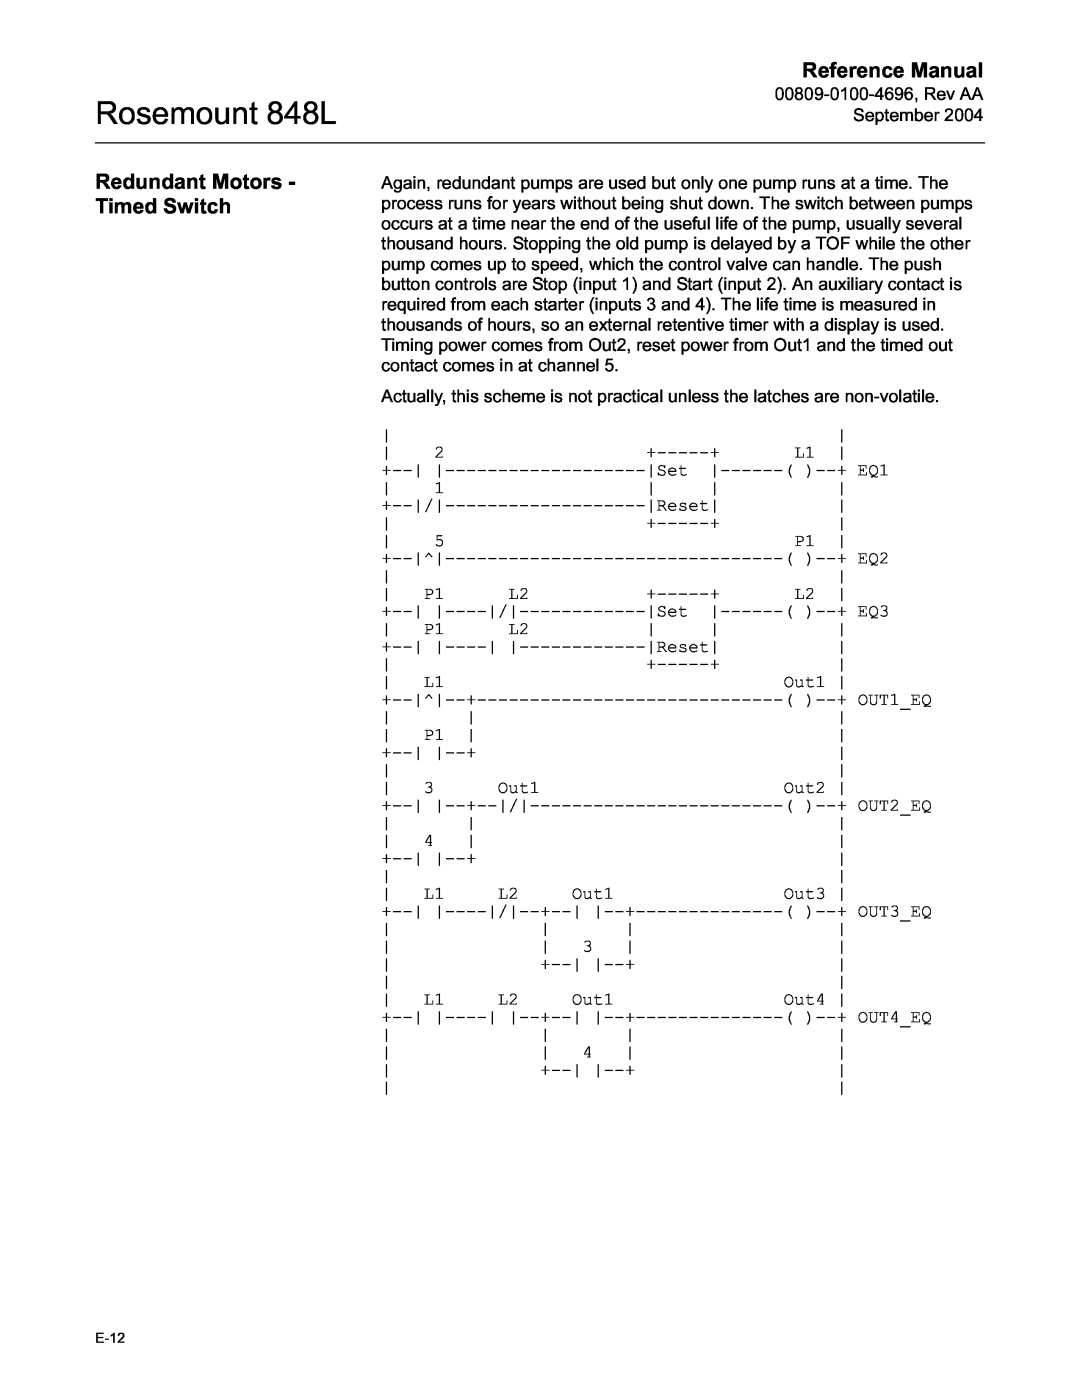 Emerson manual Redundant Motors - Timed Switch, Rosemount 848L, Reference Manual 